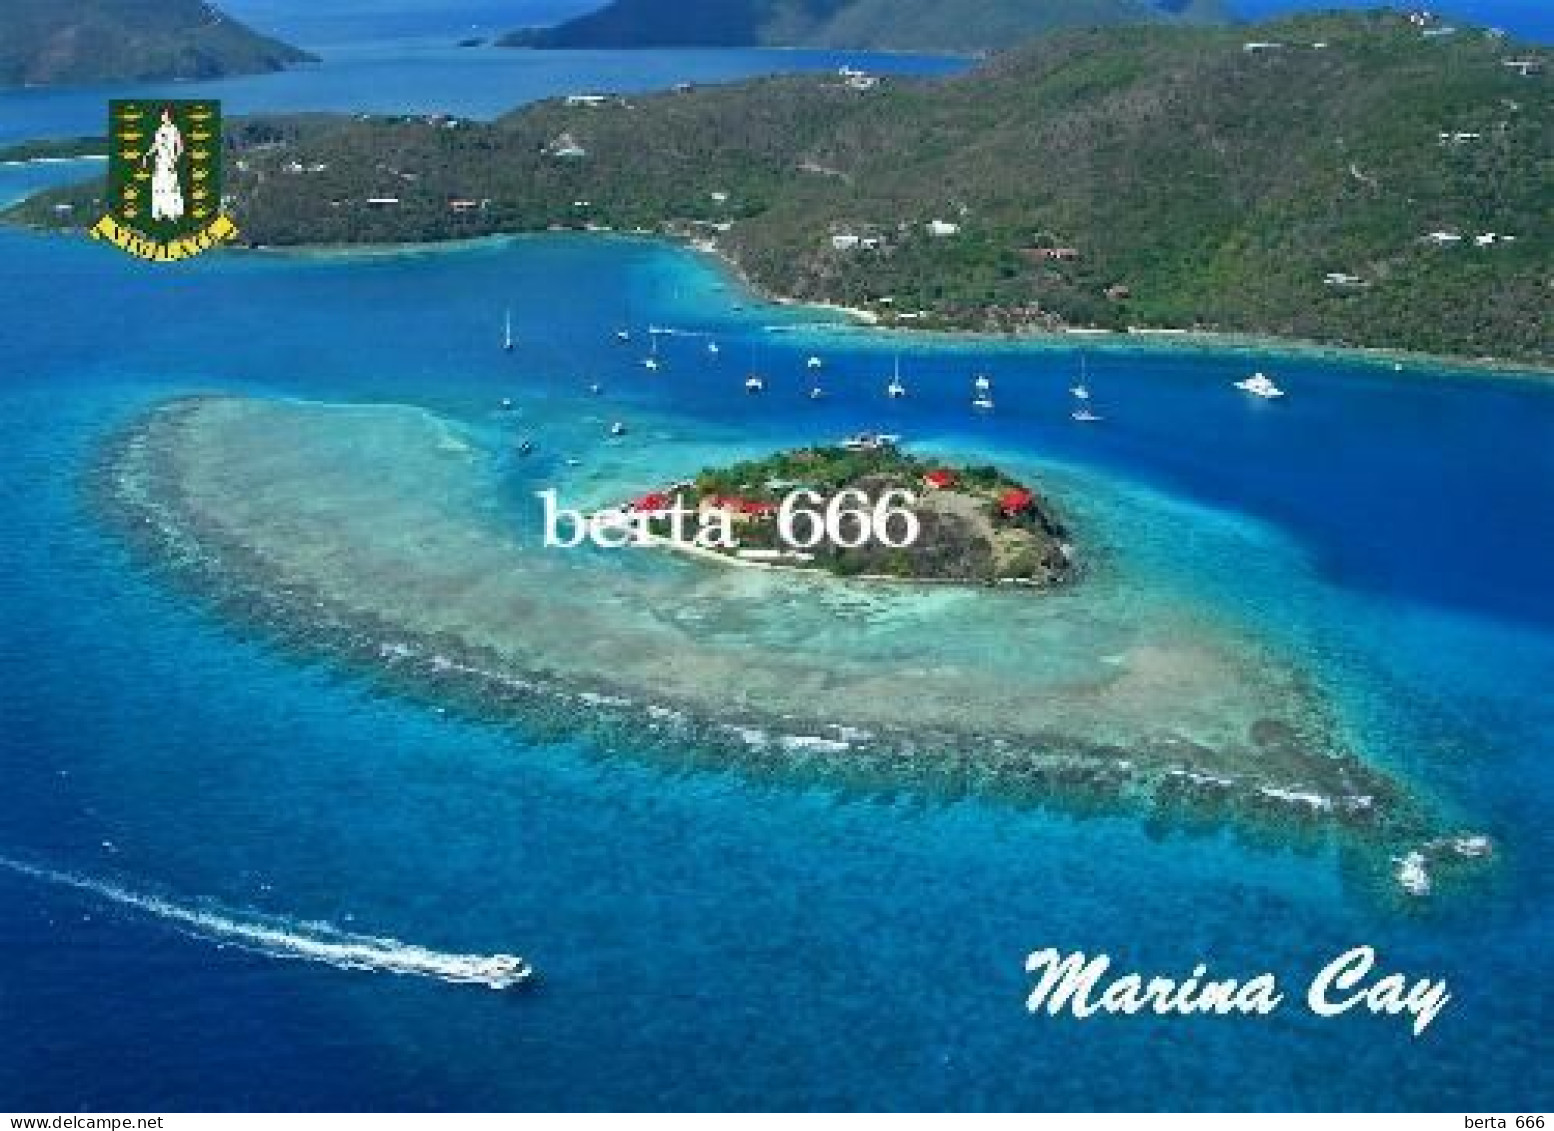 British Virgin Islands Marina Cay Aerial View New Postcard - Virgin Islands, British